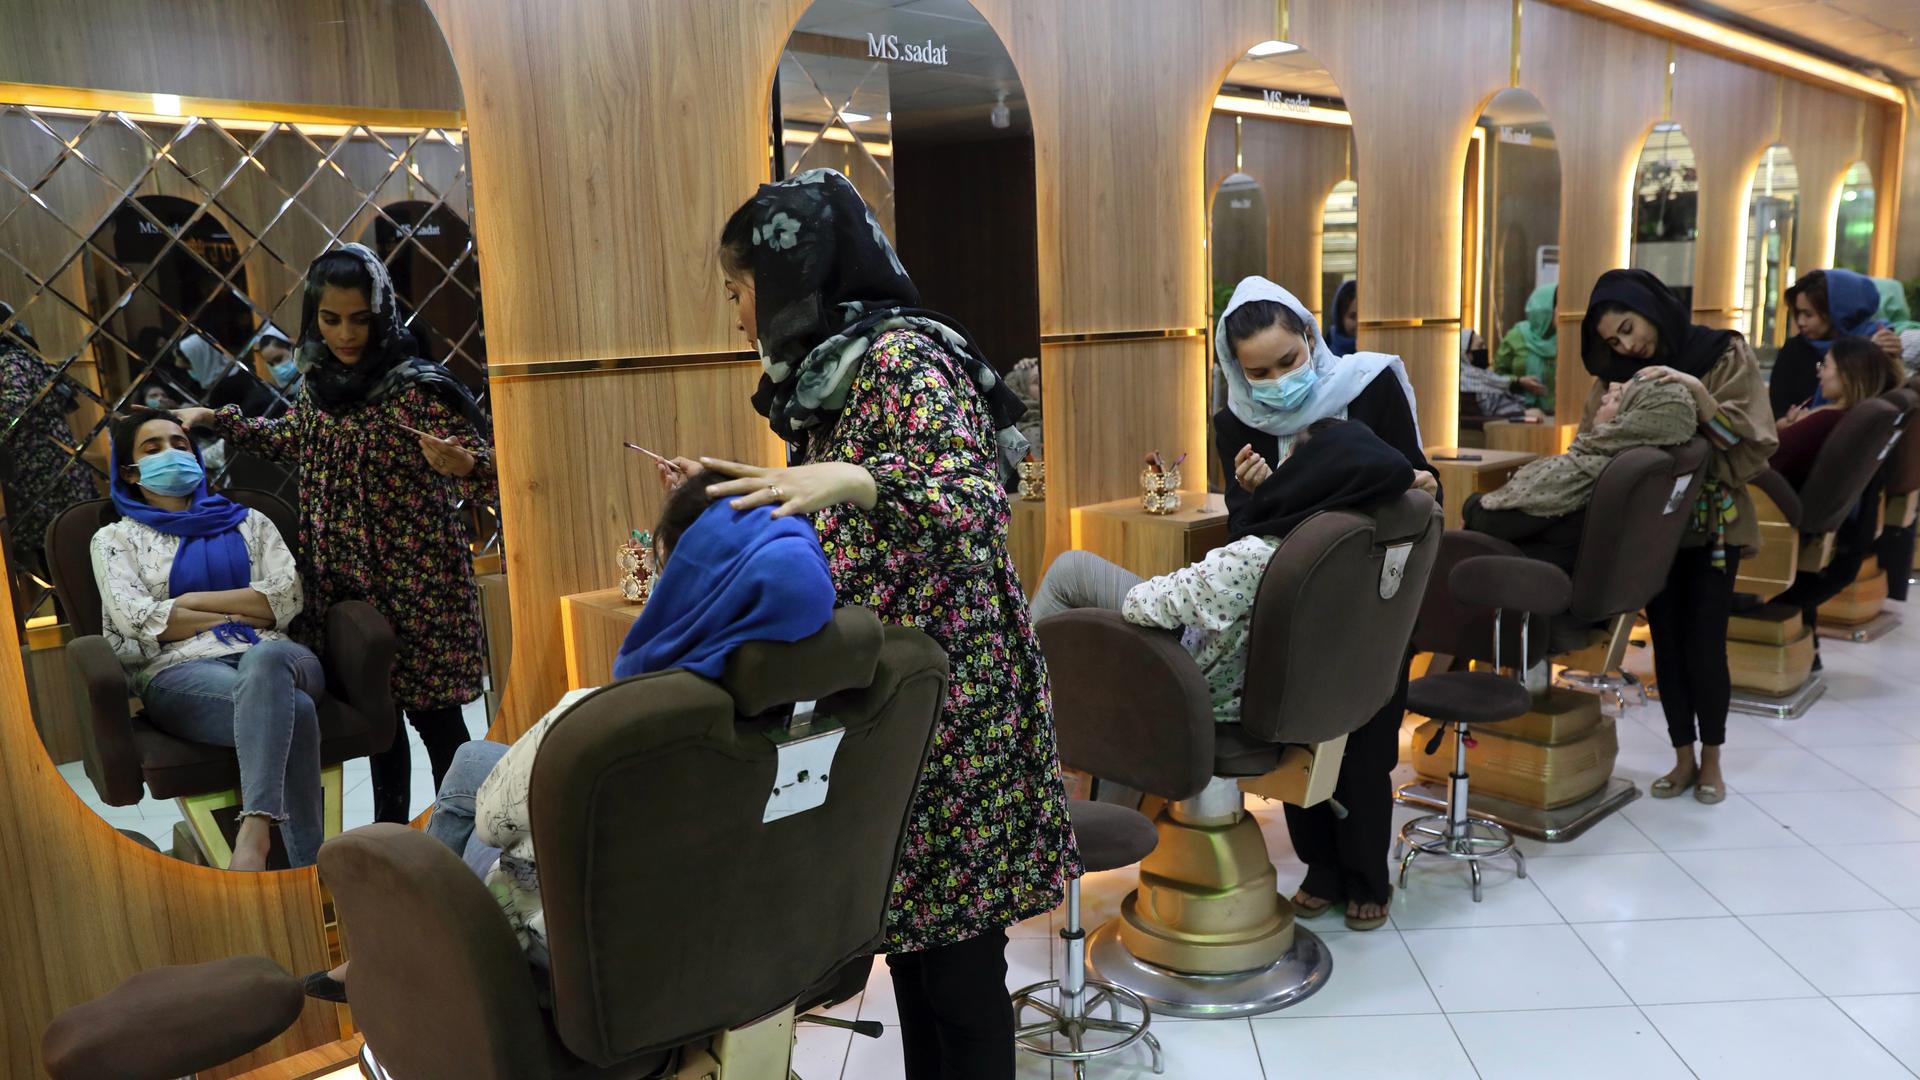 Women providing services within a beauty salon